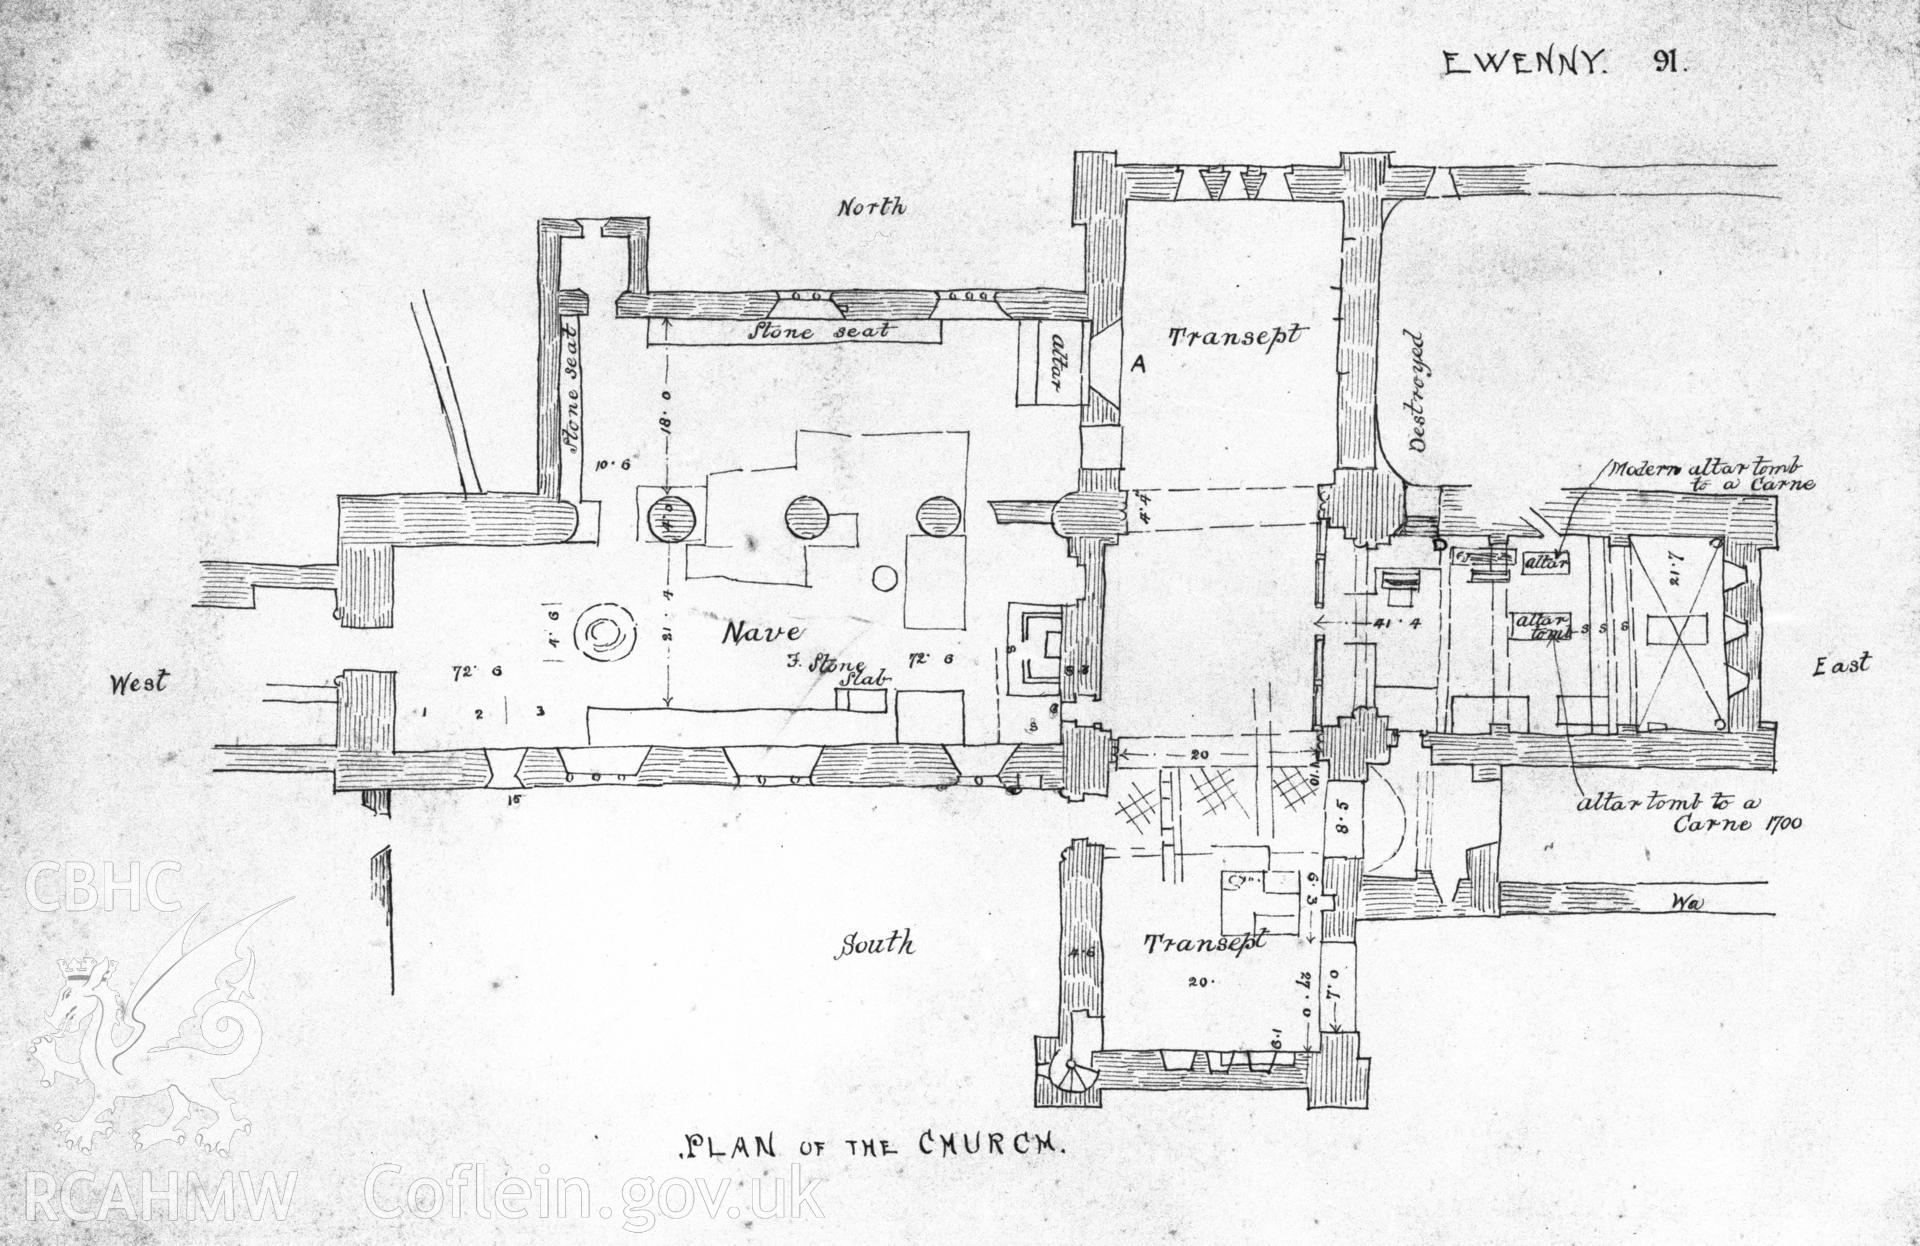 Sketch plan of Ewenny Church.